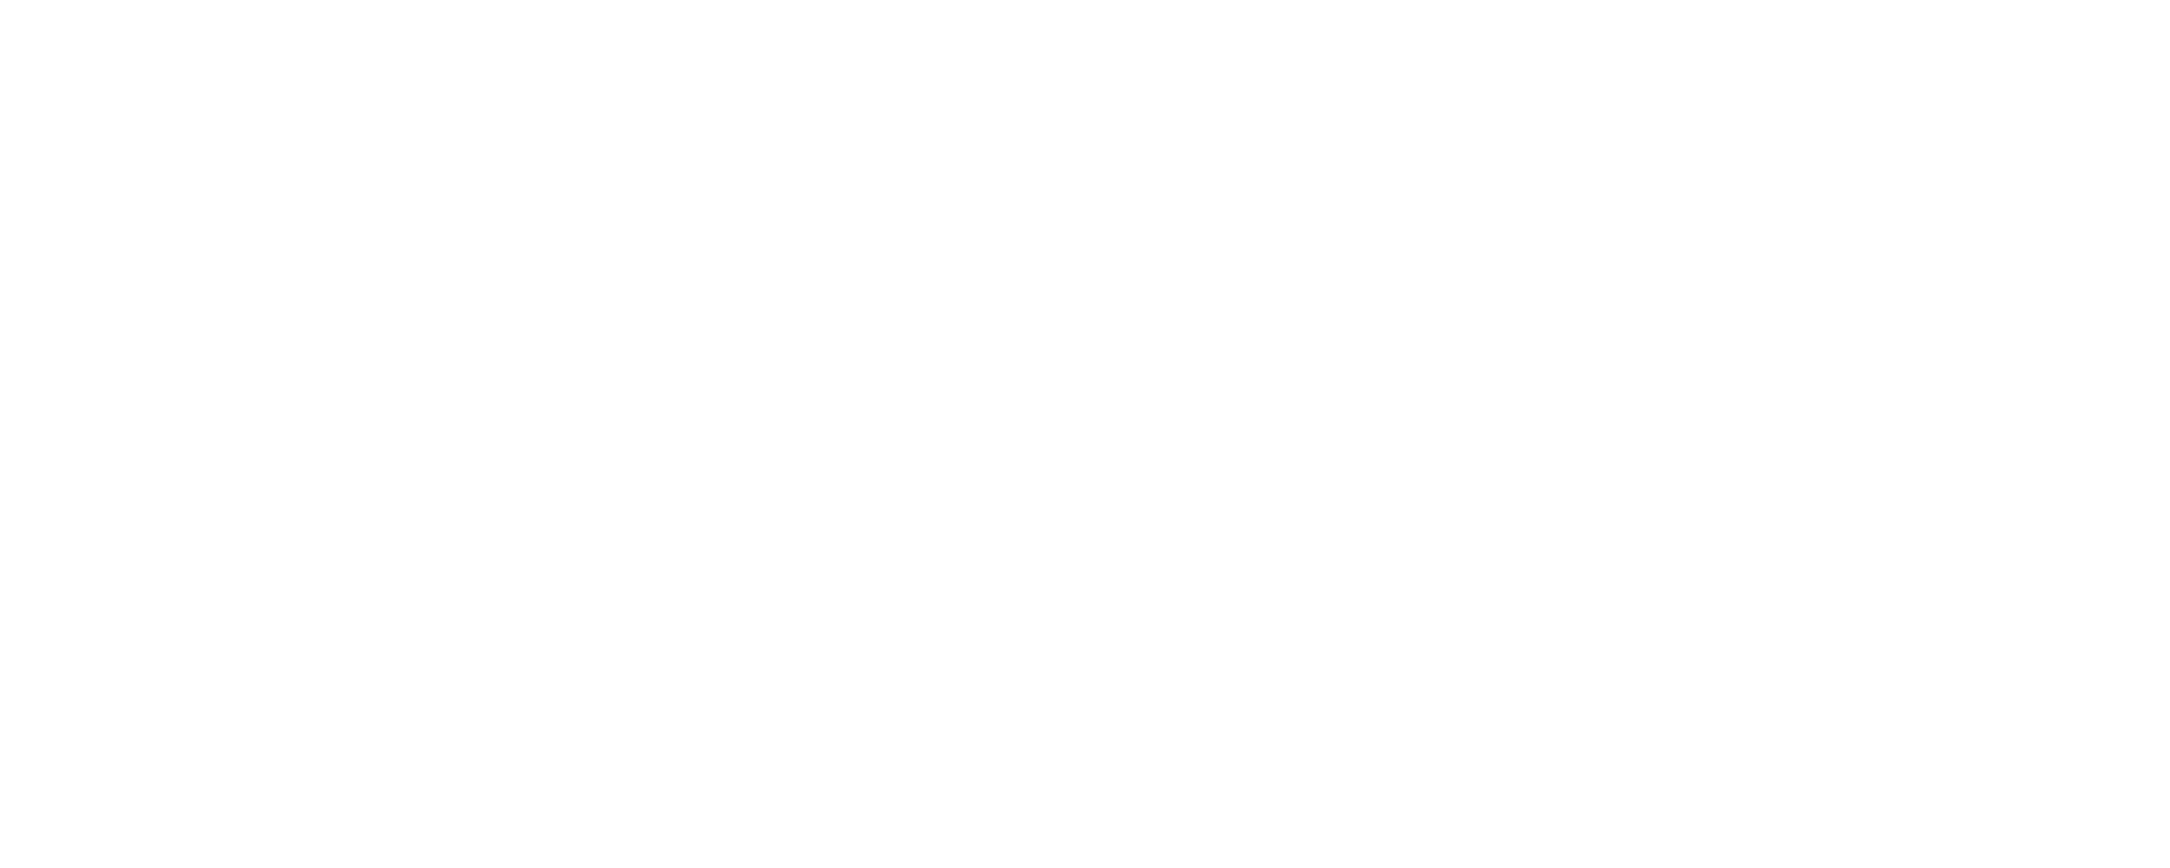 Constructionline Logo White